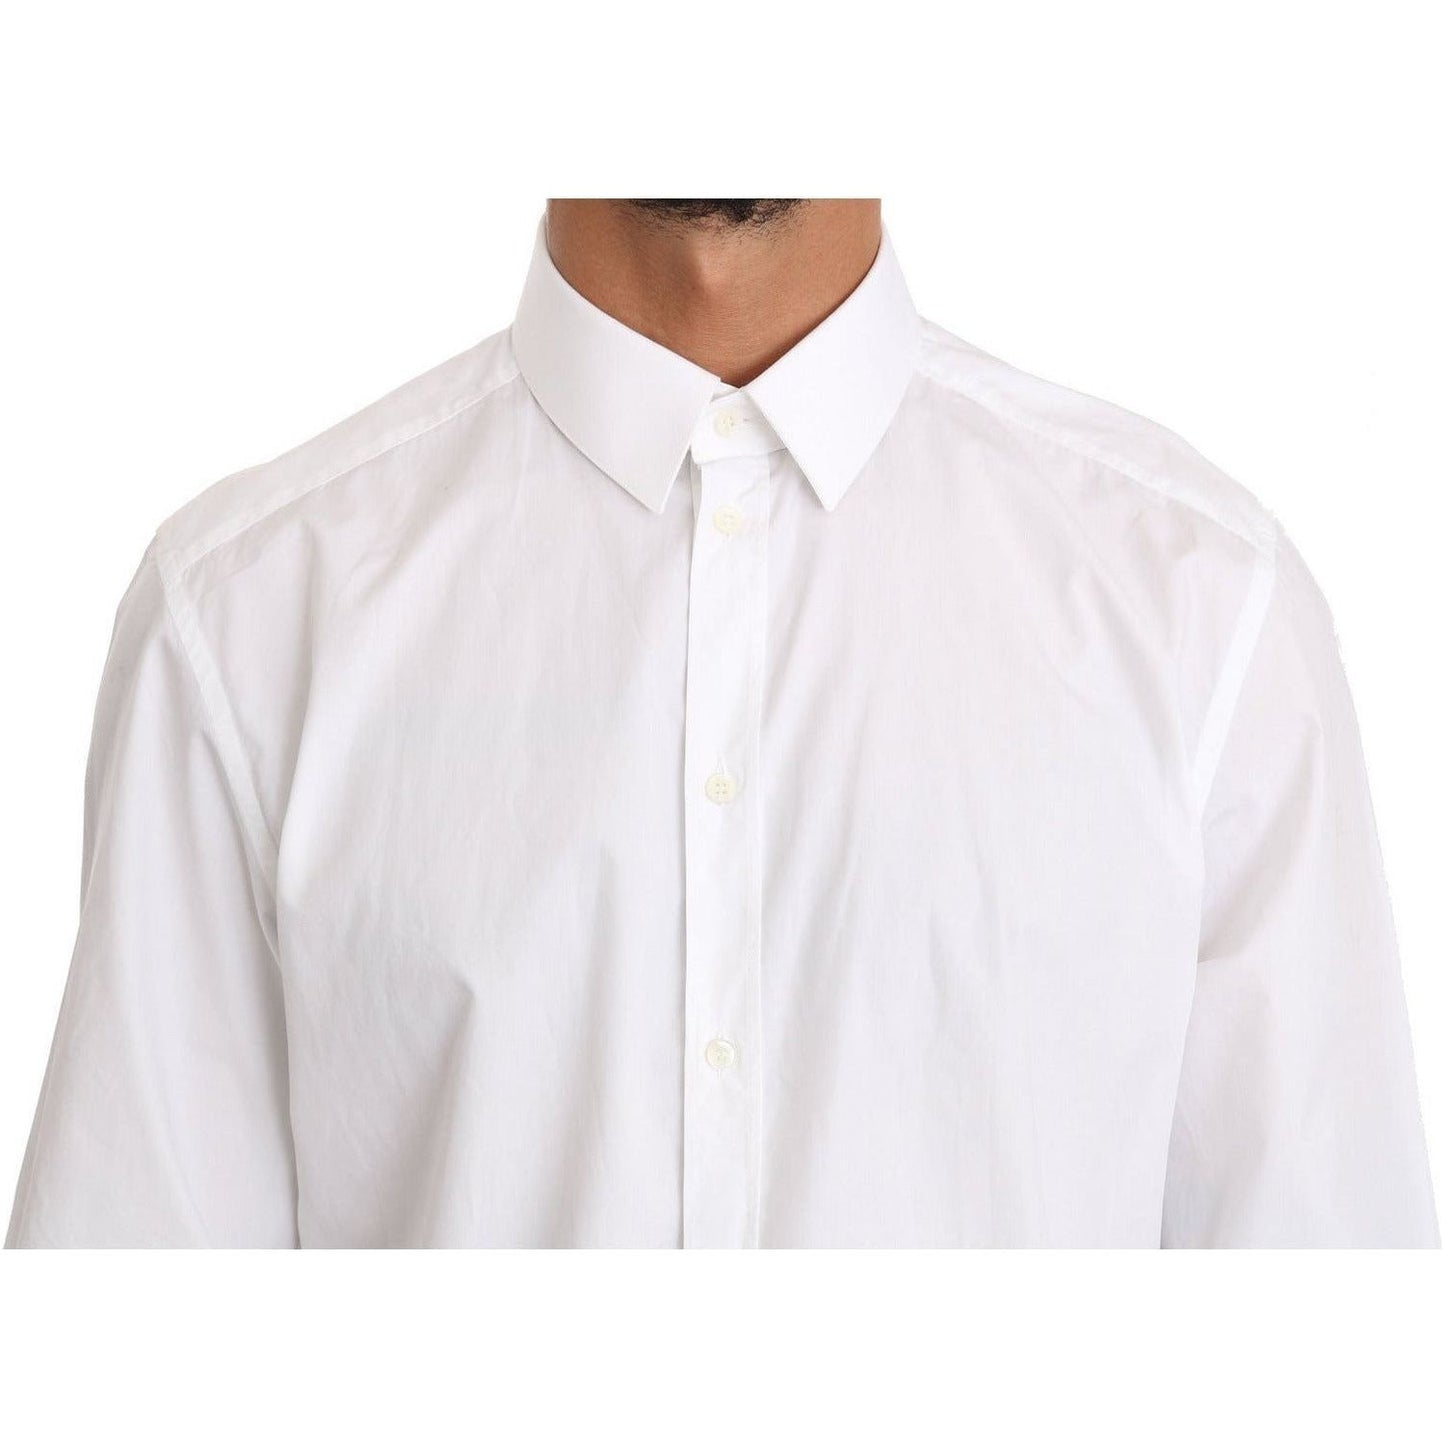 Dolce & GabbanaElegant Slim Fit Dress Shirt in Pure WhiteMcRichard Designer Brands£159.00